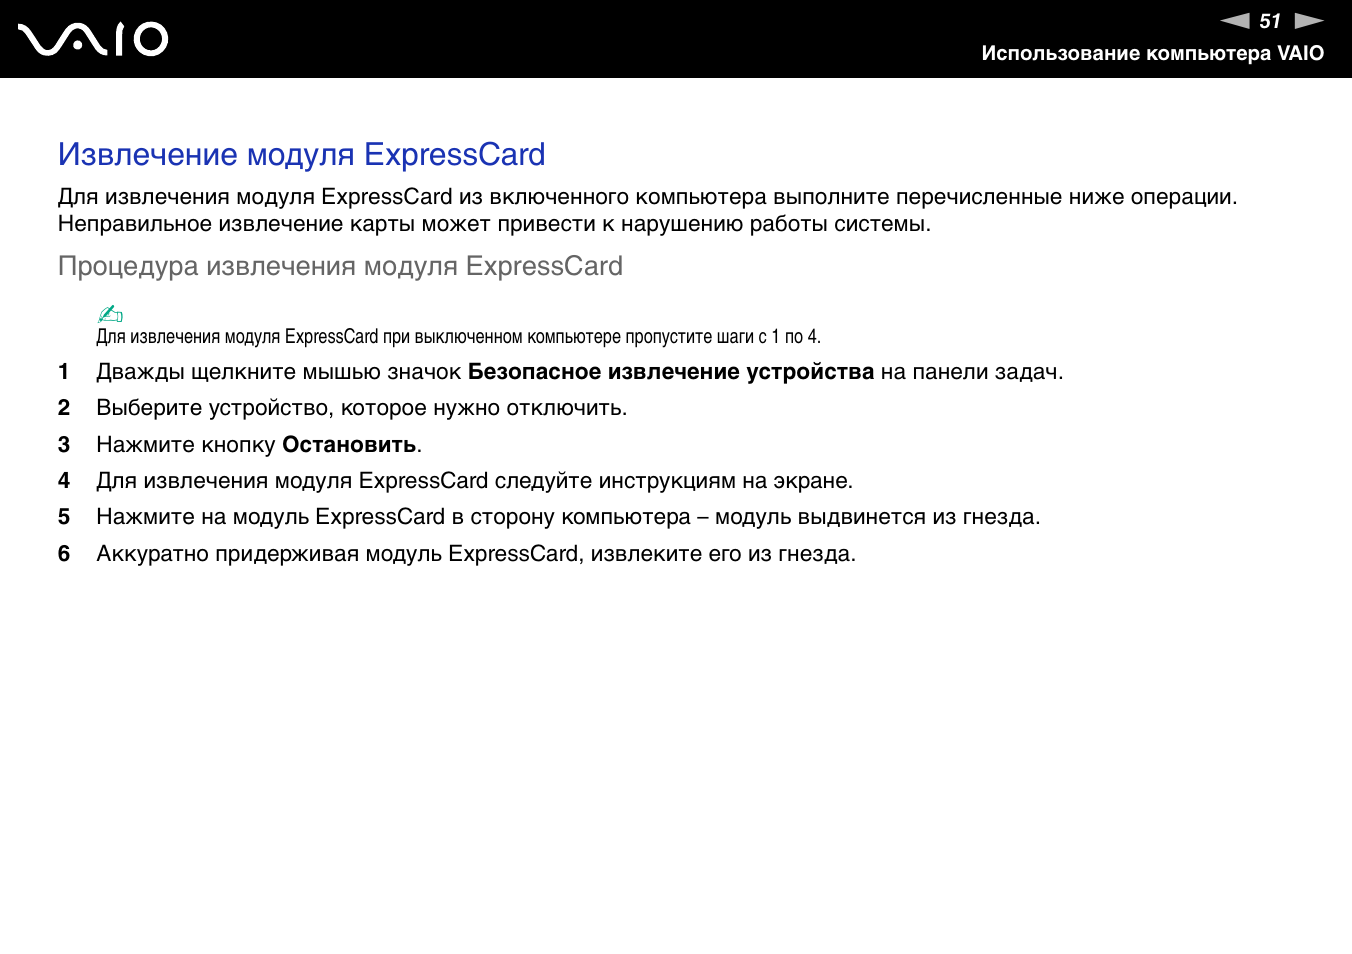 Извлечение модуля expresscard, Процедура извлечения модуля expresscard | Инструкция по эксплуатации Sony VGN-Z11AWN | Страница 51 / 232